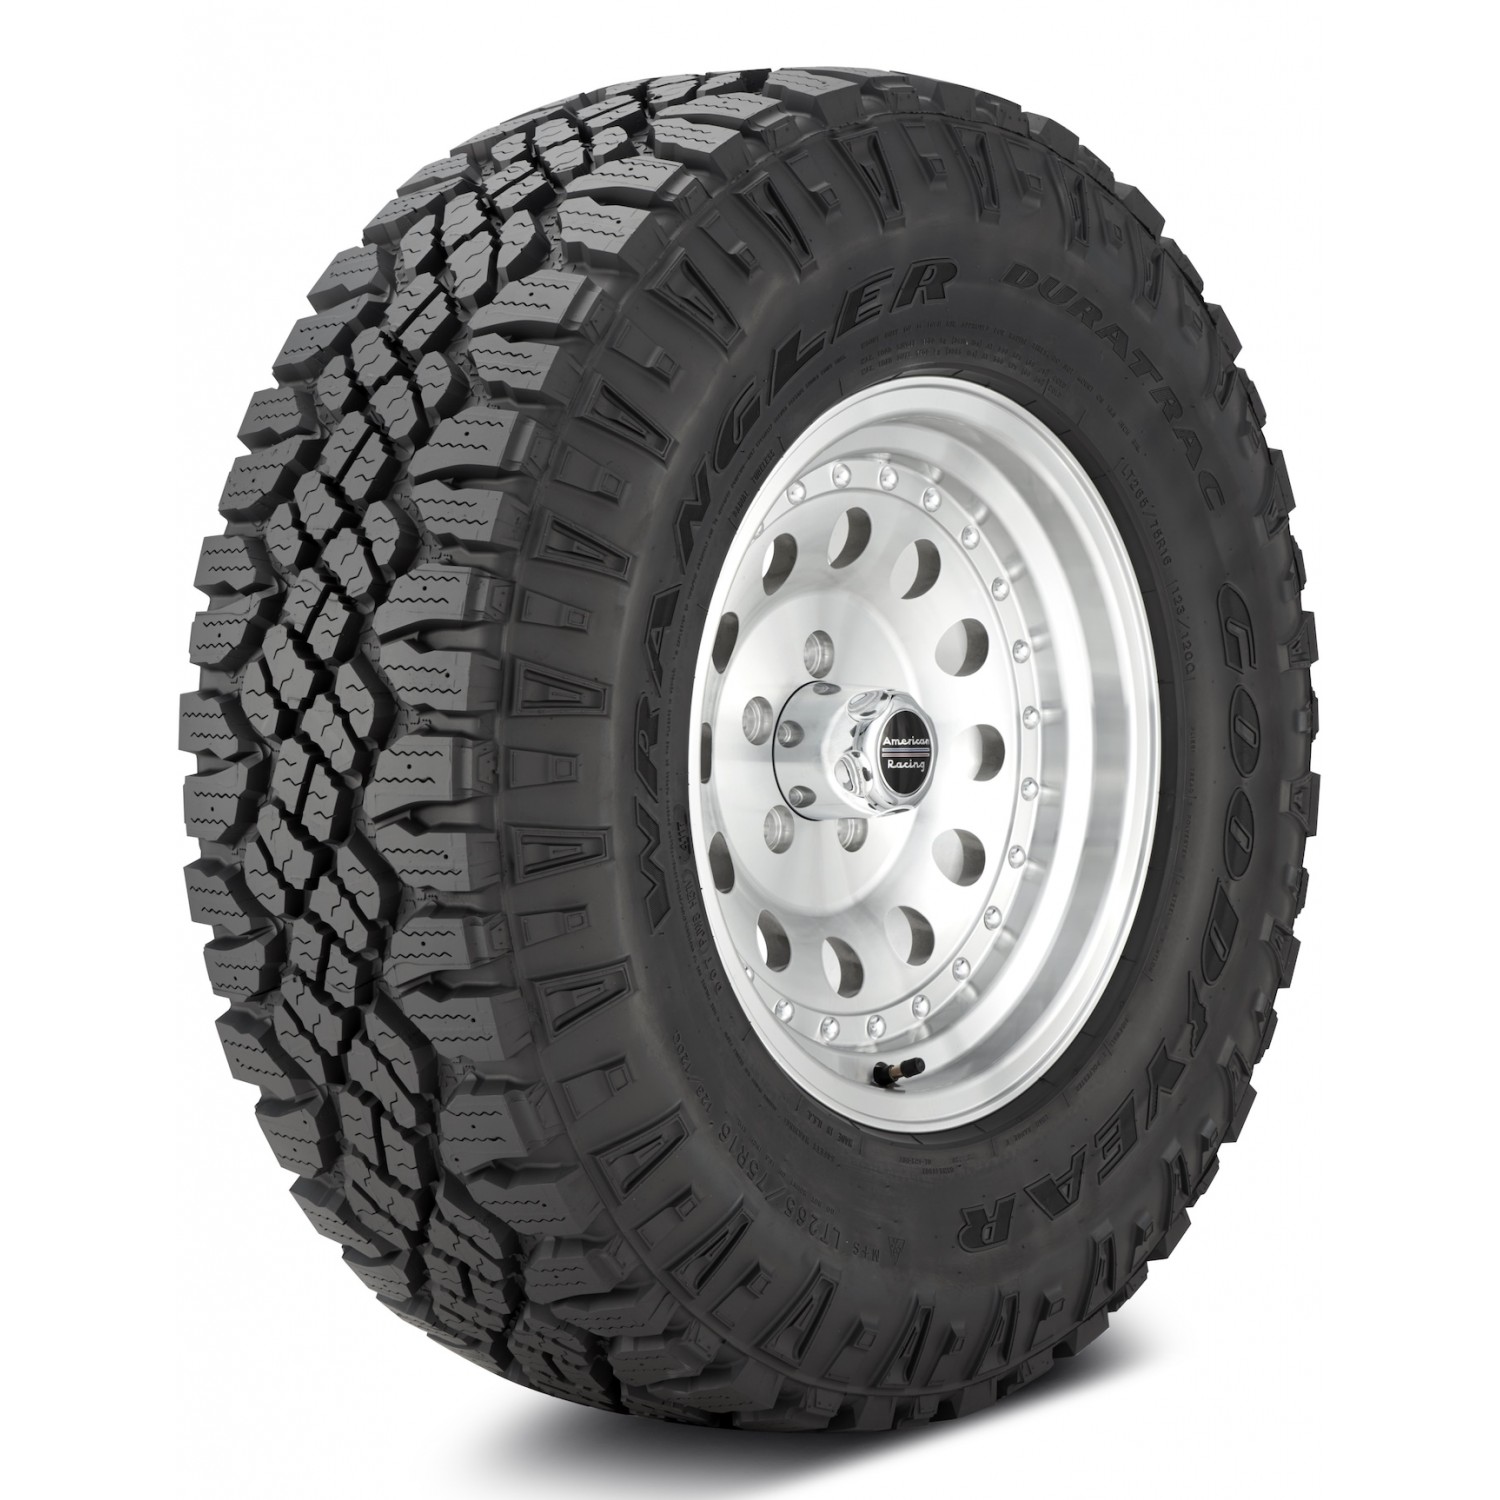 Goodyear Wrangler DuraTrac Black Sidewall Tire (LT285/75R16 126P) vzn121179